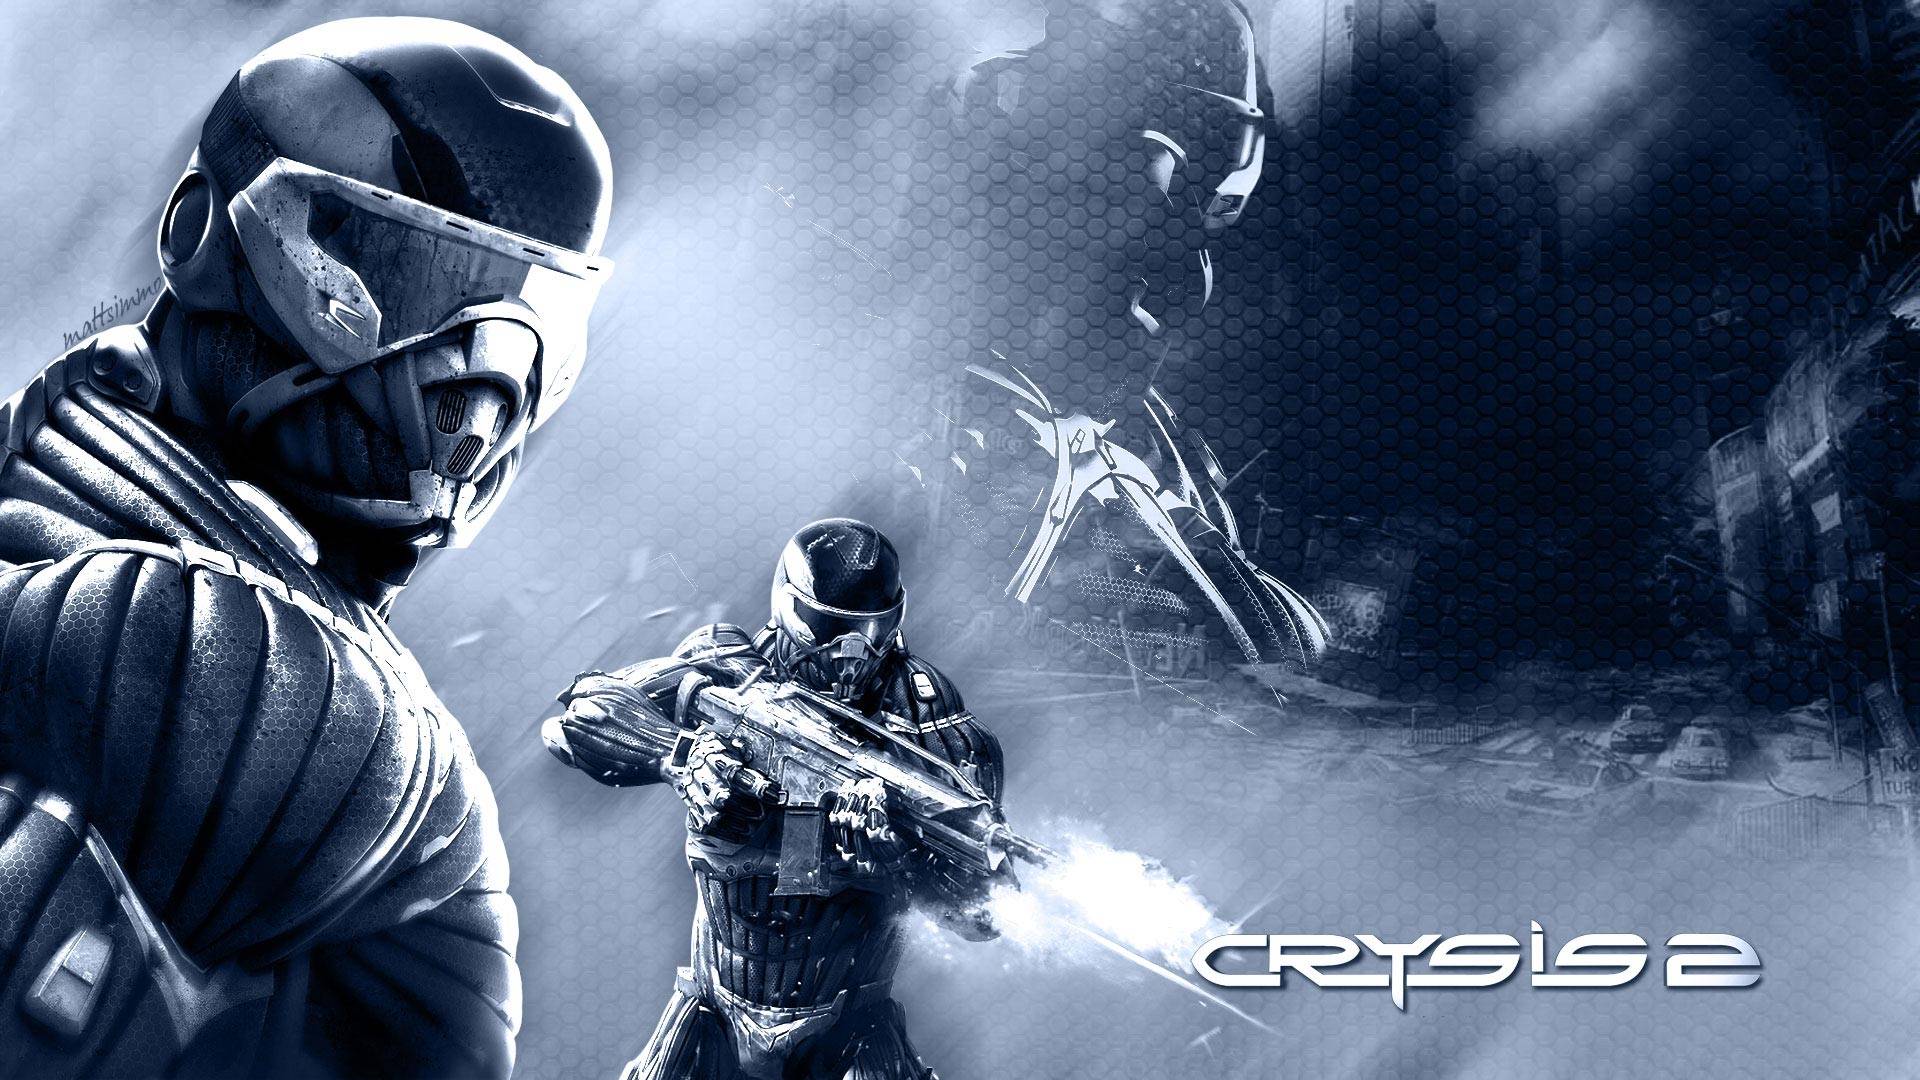 Crysis 2 Wallpaper Full HD 1080P Xbox 360 « GamingBolt.com: Video